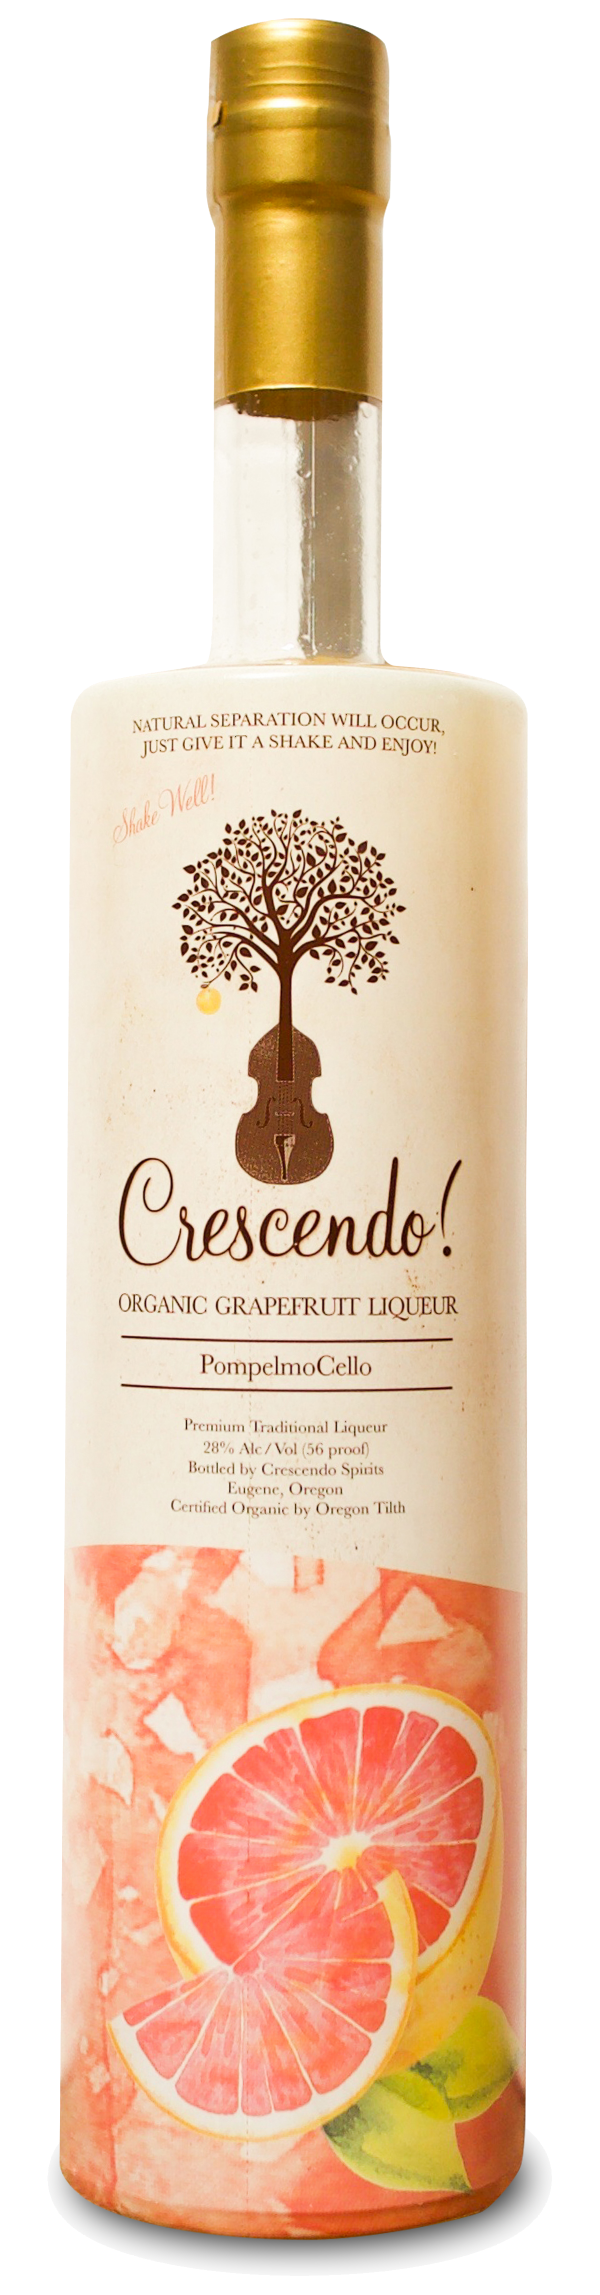 Crescendo PompelmoCello Organic Grapefruit Liqueur